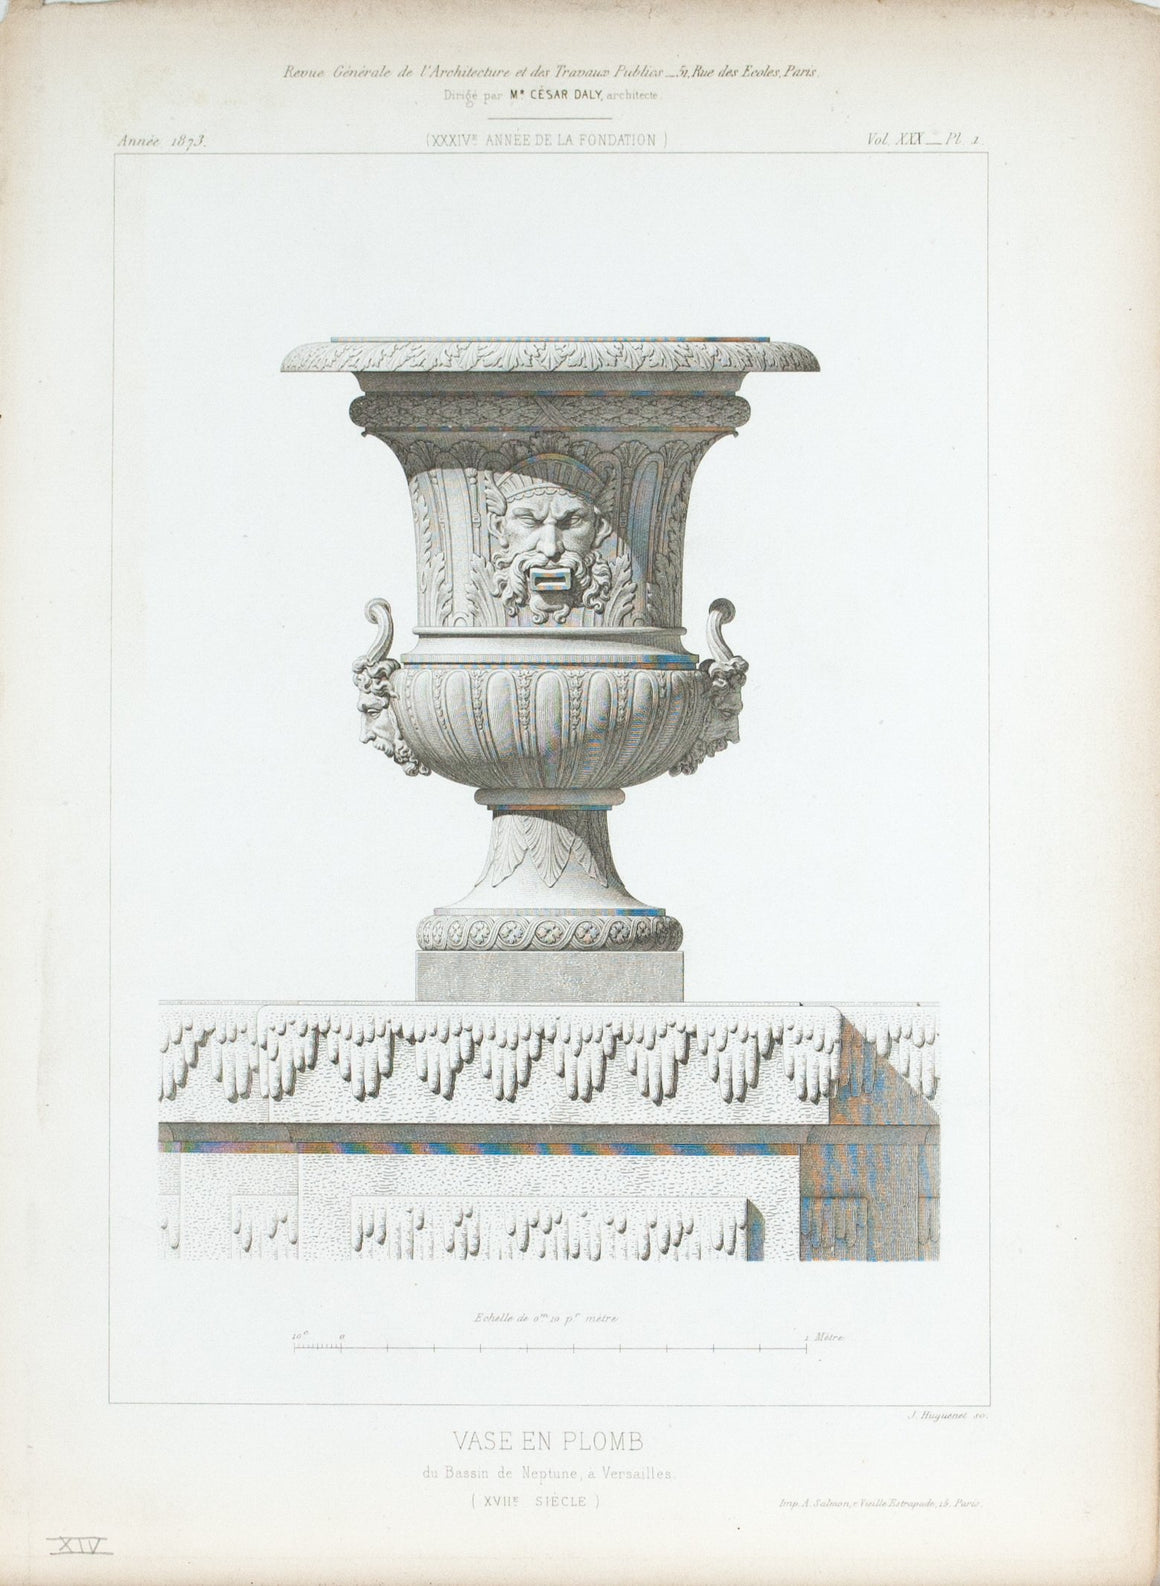 1873 Architecture Antique Print Ornate Vase 17th c. Design (Vase En Plomb)